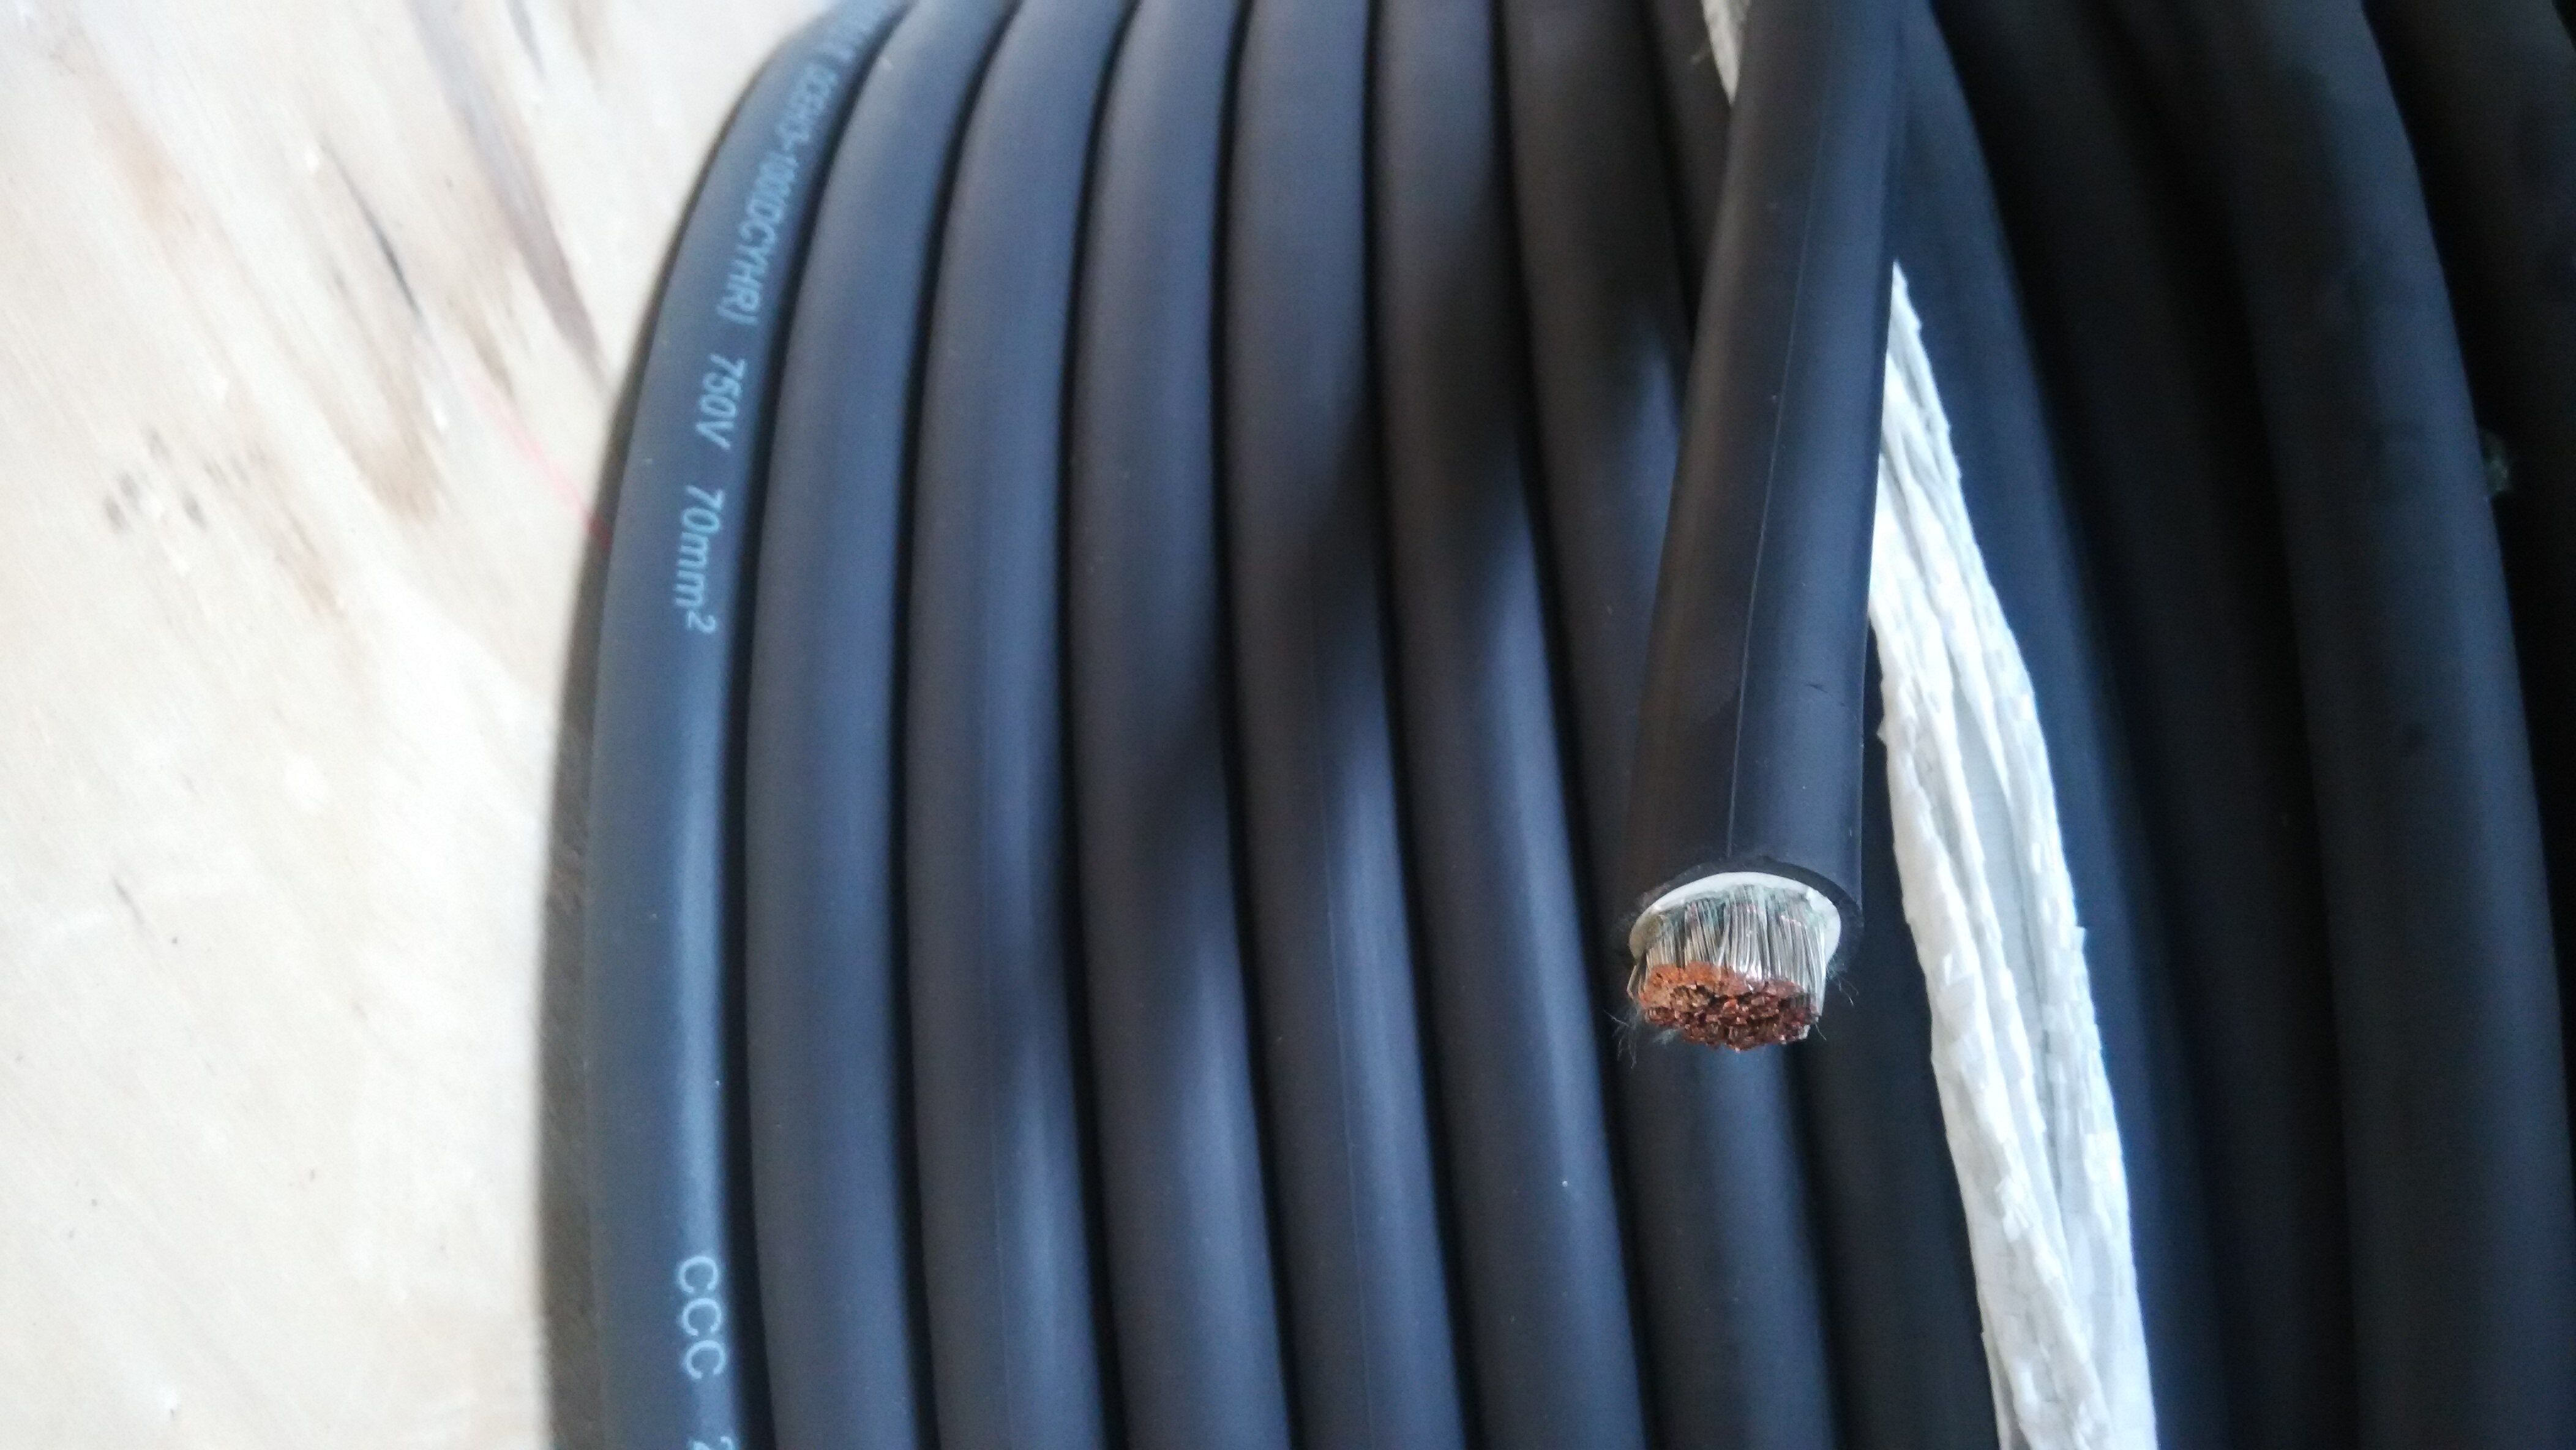 YGZ、YGZ-F46R、YGZ-F46RP为中型硅橡胶软电缆